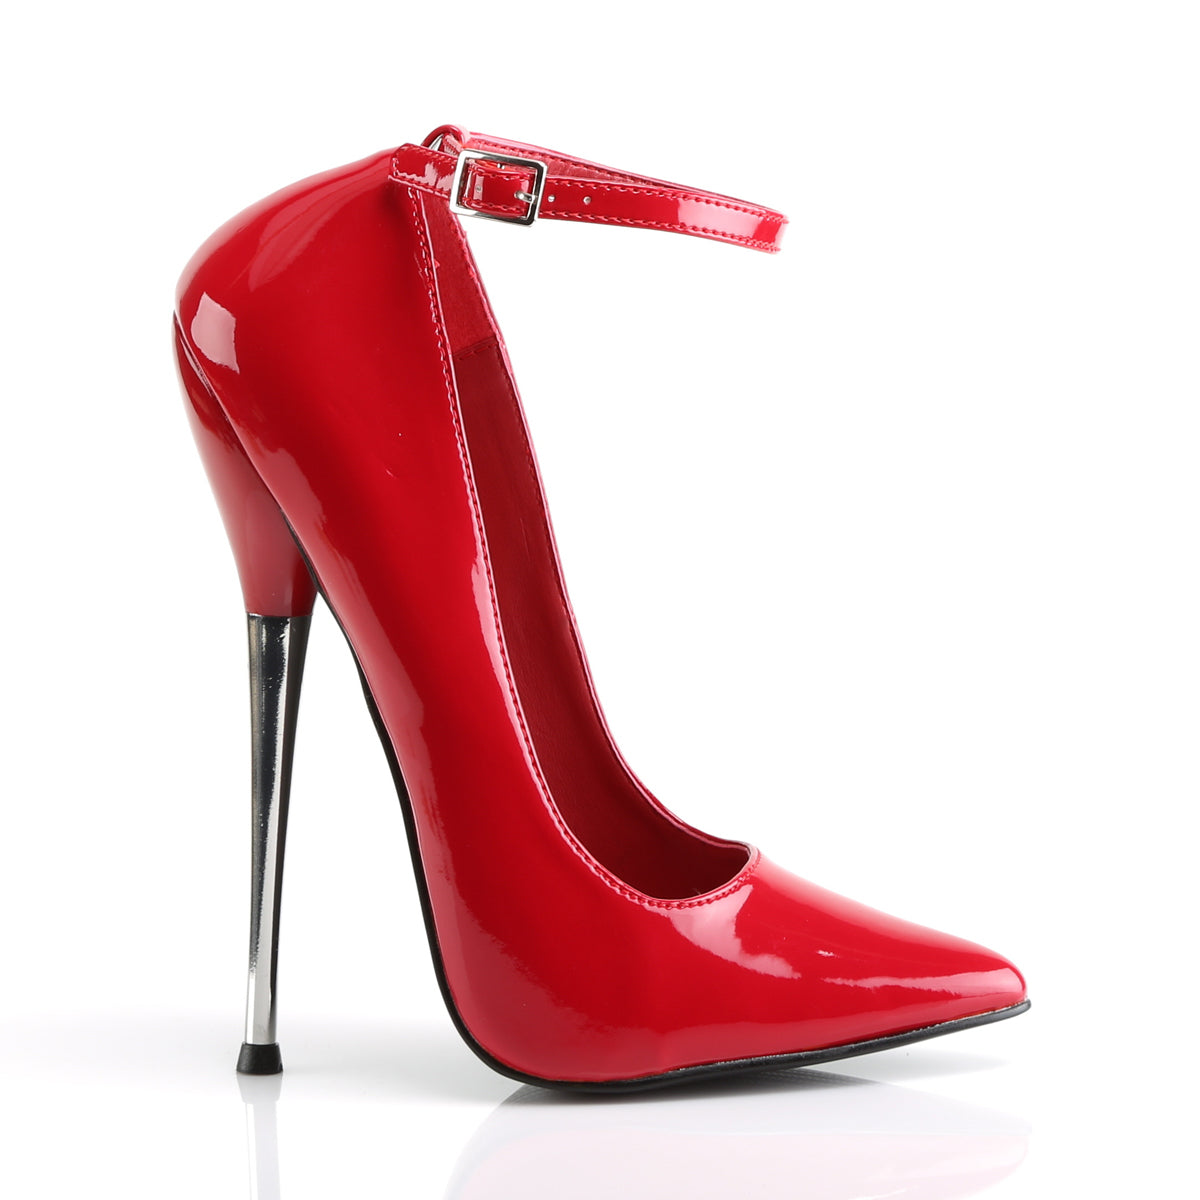 DAGGER-12 Devious Heels Red Patent Single Soles [Fetish Heels]